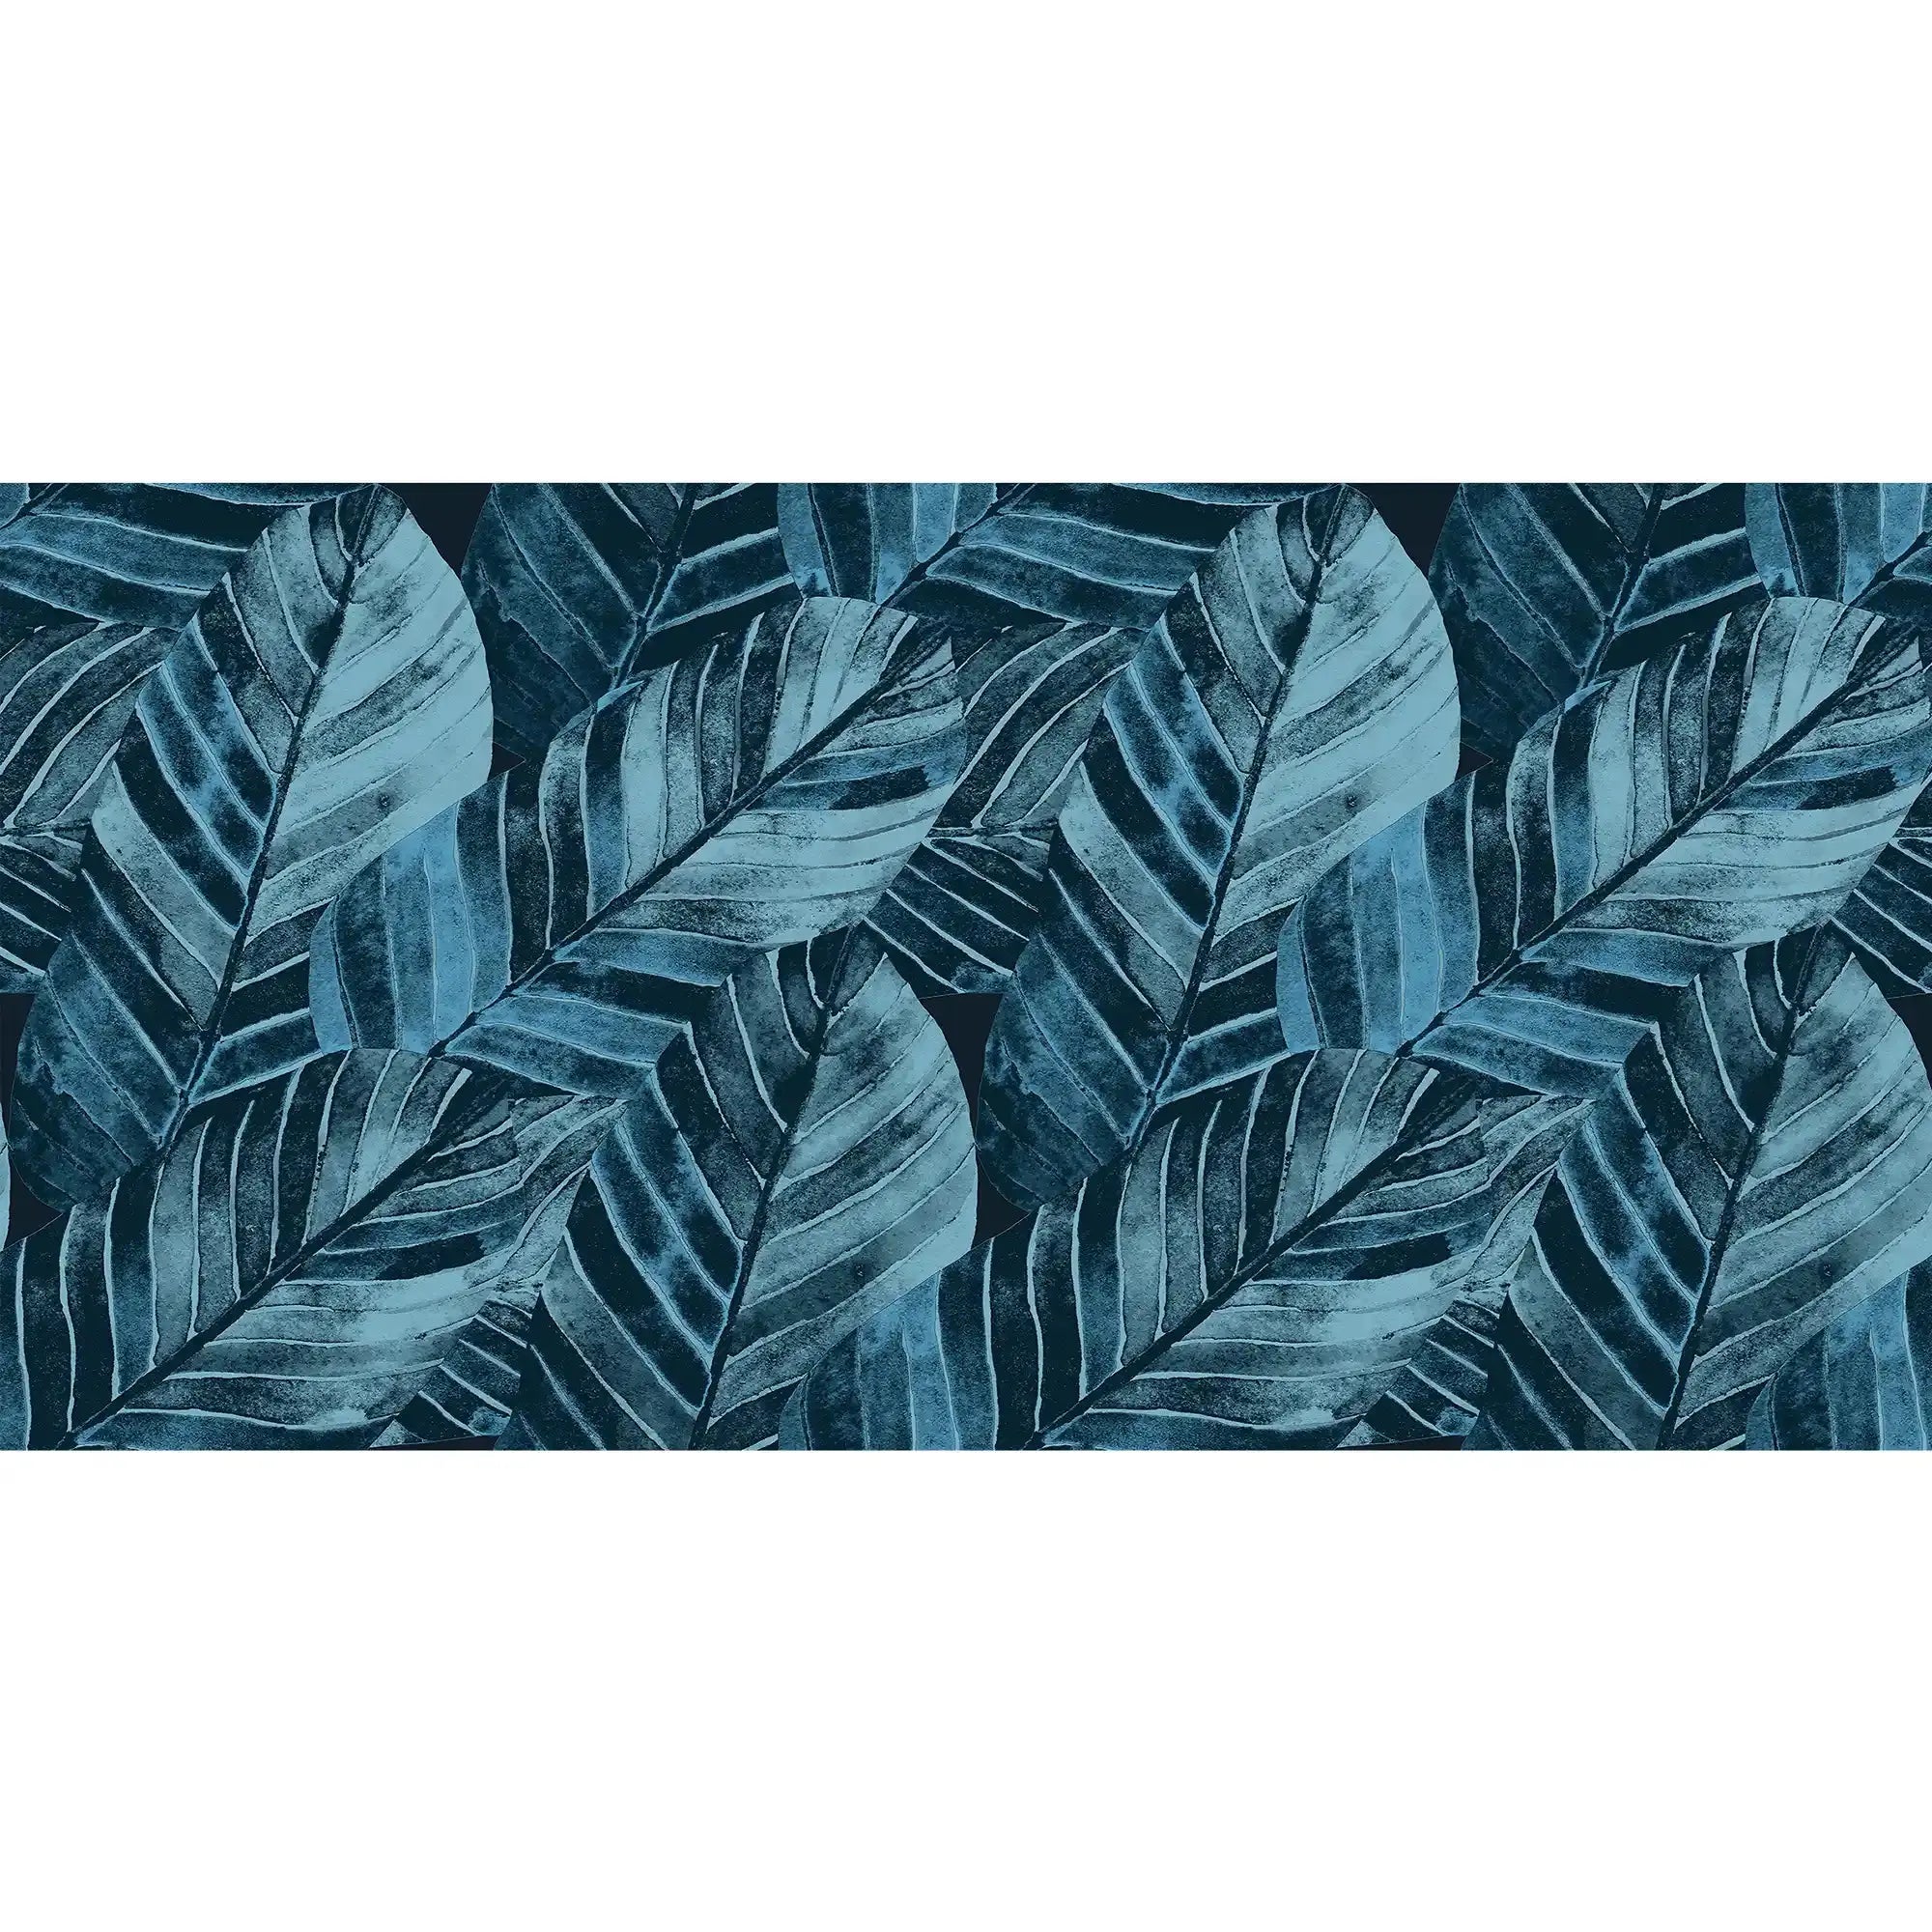 3087-C / Leaf Wallpaper: Green Palm Print, Sticky Wallpaper for Walls, Ideal for DIY Decor & Renters - Artevella